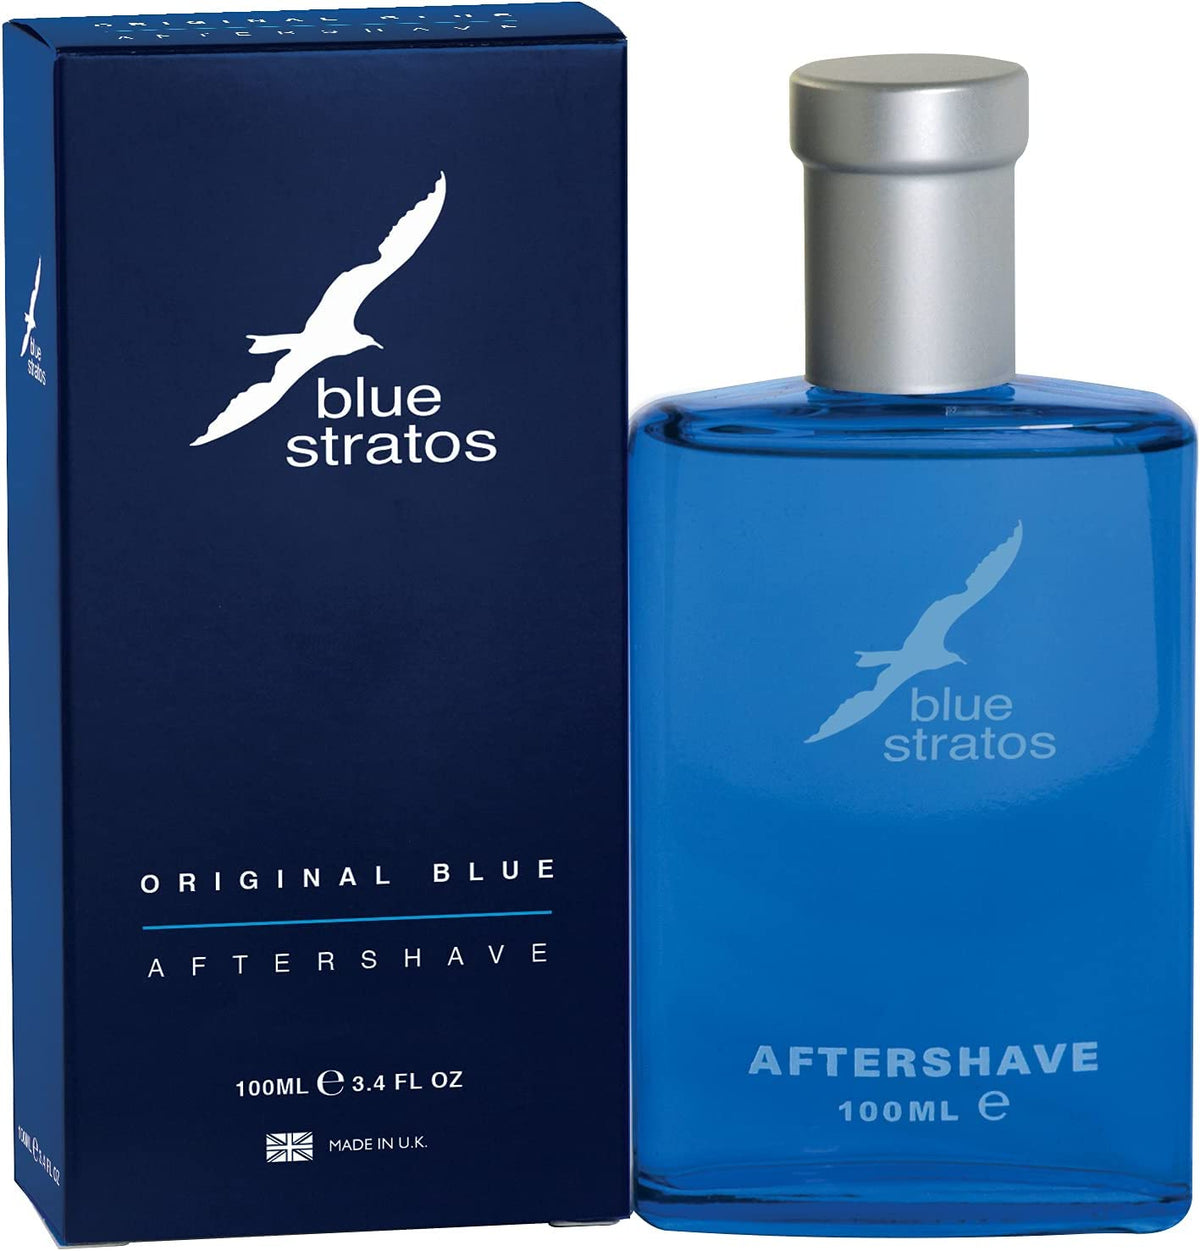 Blue Stratos Original Blue 100ml Aftershave